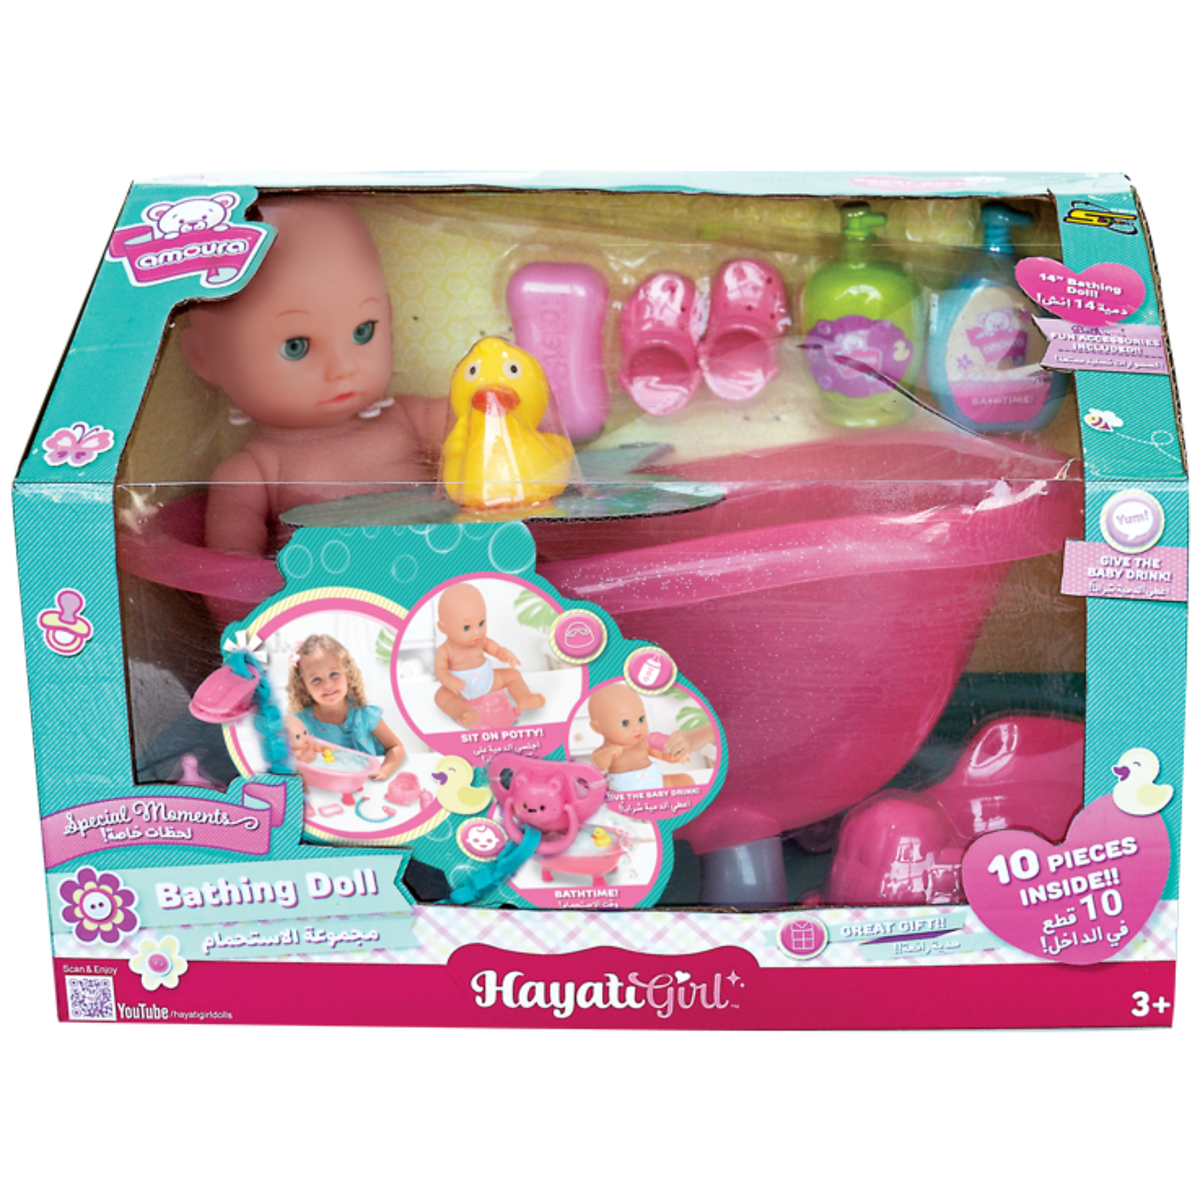 Hayati Amoura Bathing Doll, 14 inches, Pink, 8658